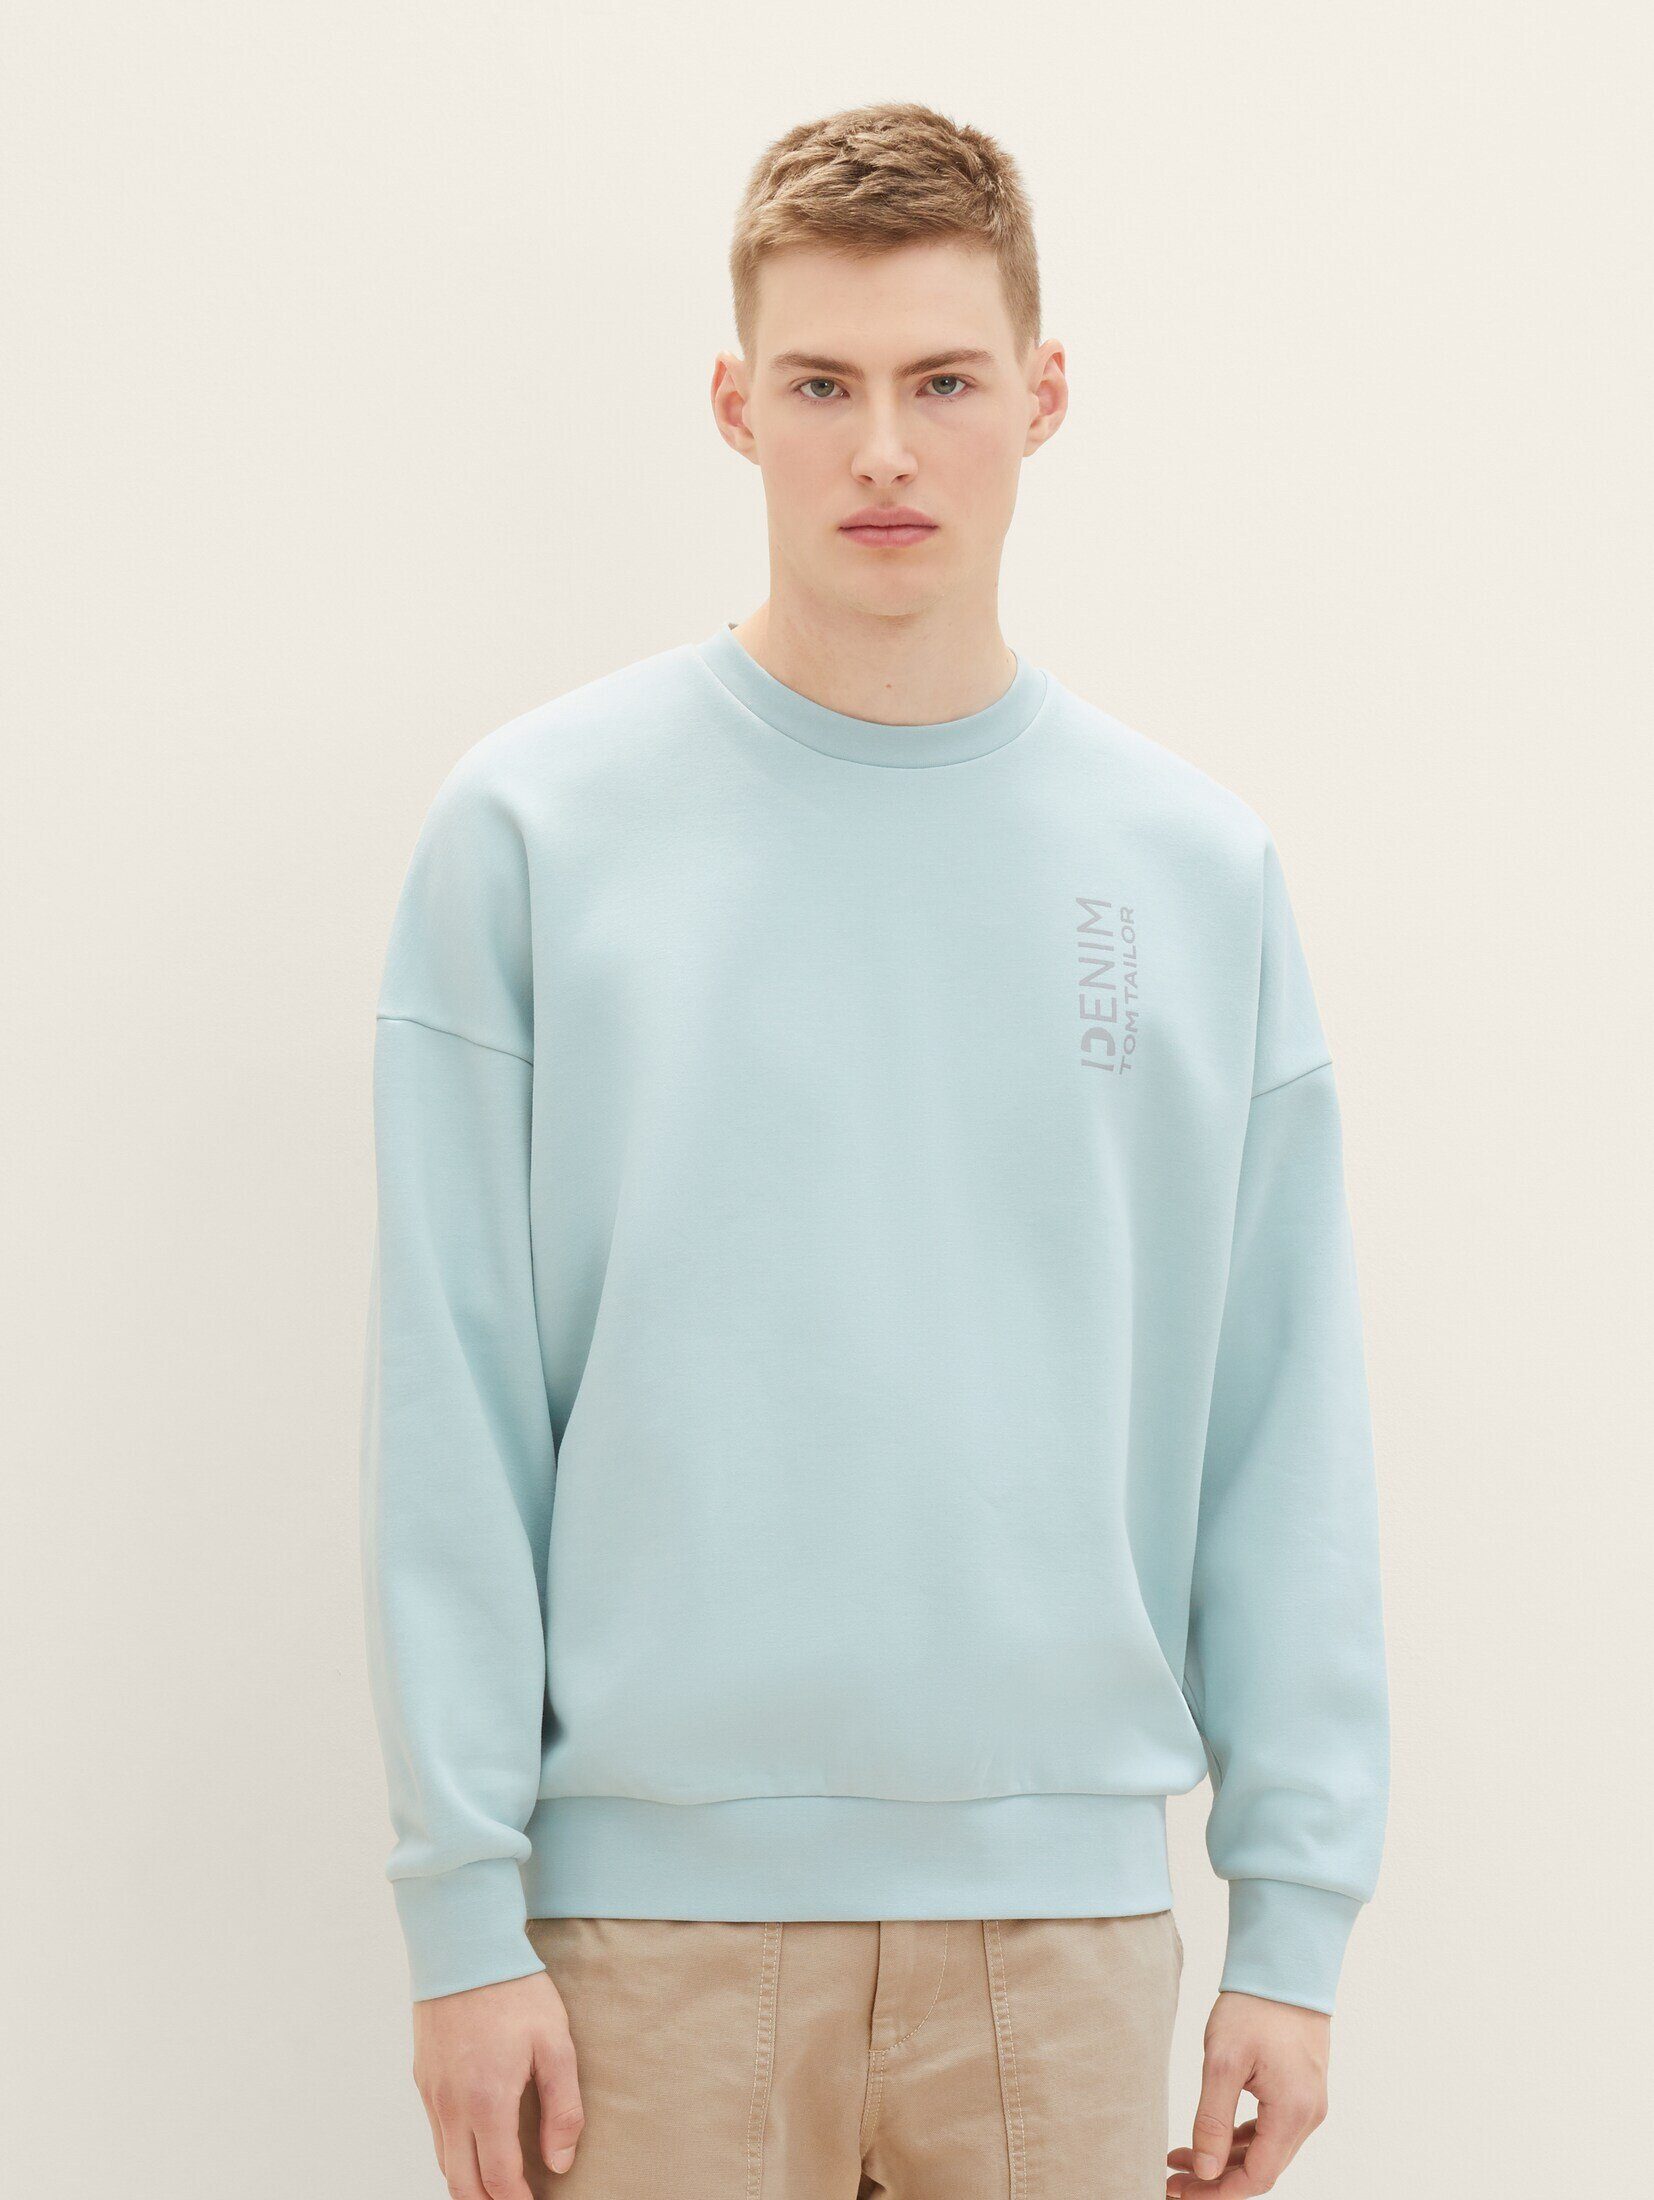 TOM TAILOR Denim Hoodie Oversized Sweatshirt mit recyceltem Polyester dusty mint blue | Sweatshirts